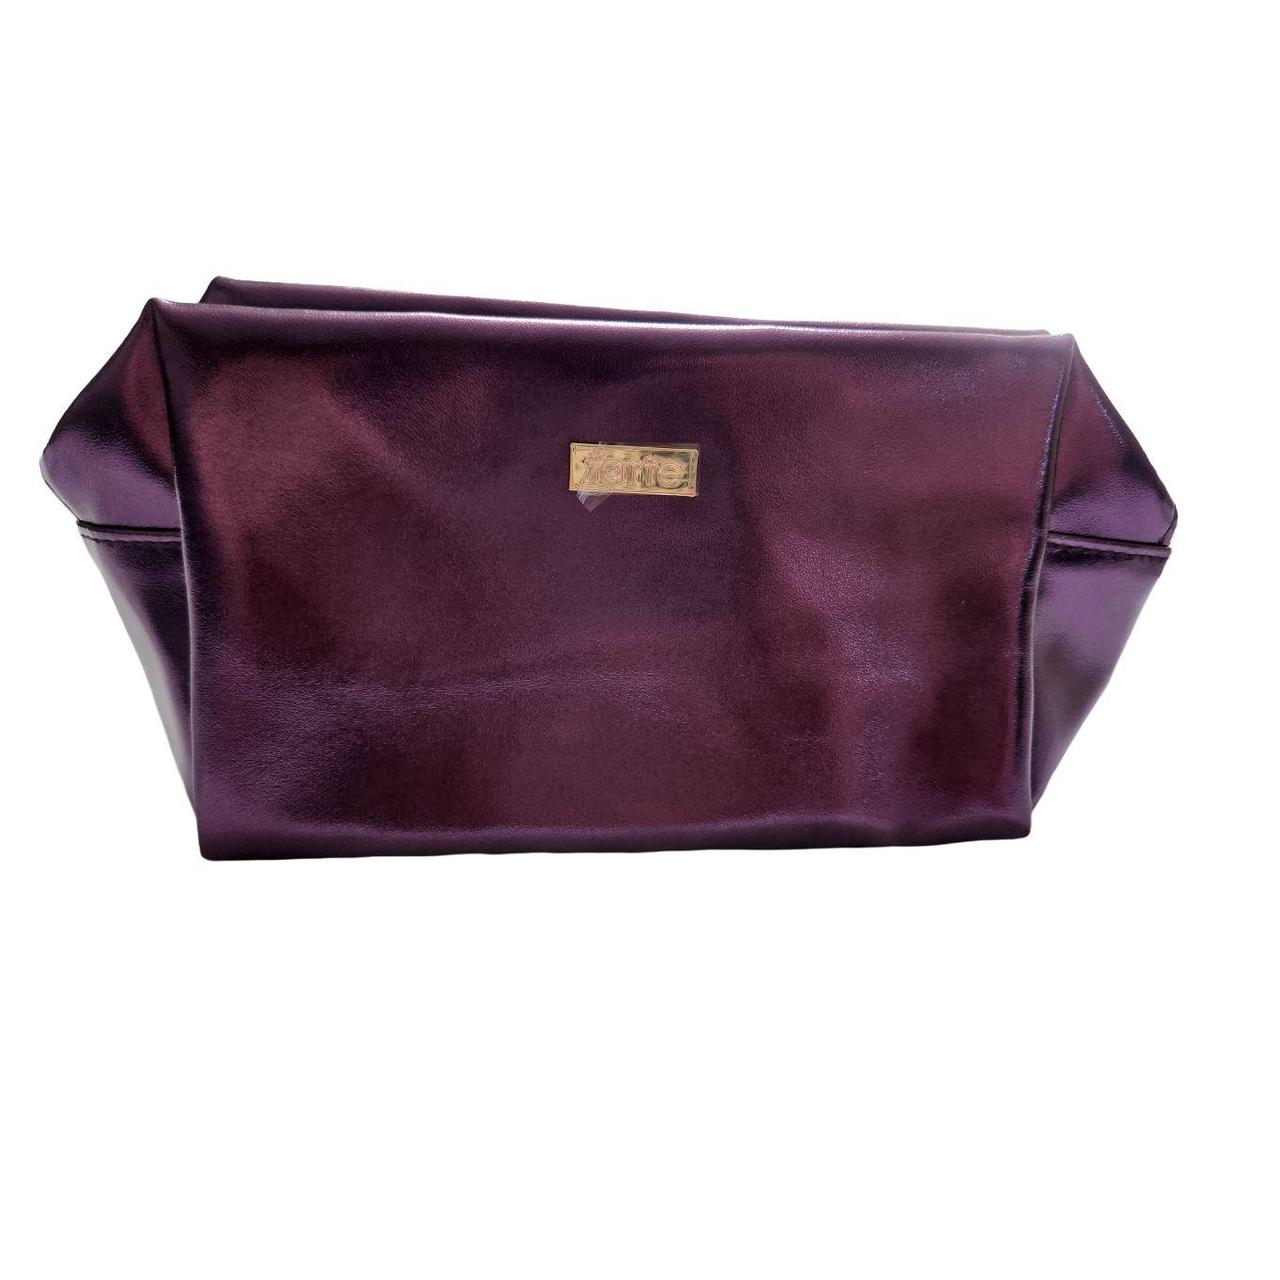 Product Image 1 - •Shiny metallic purple makeup bag